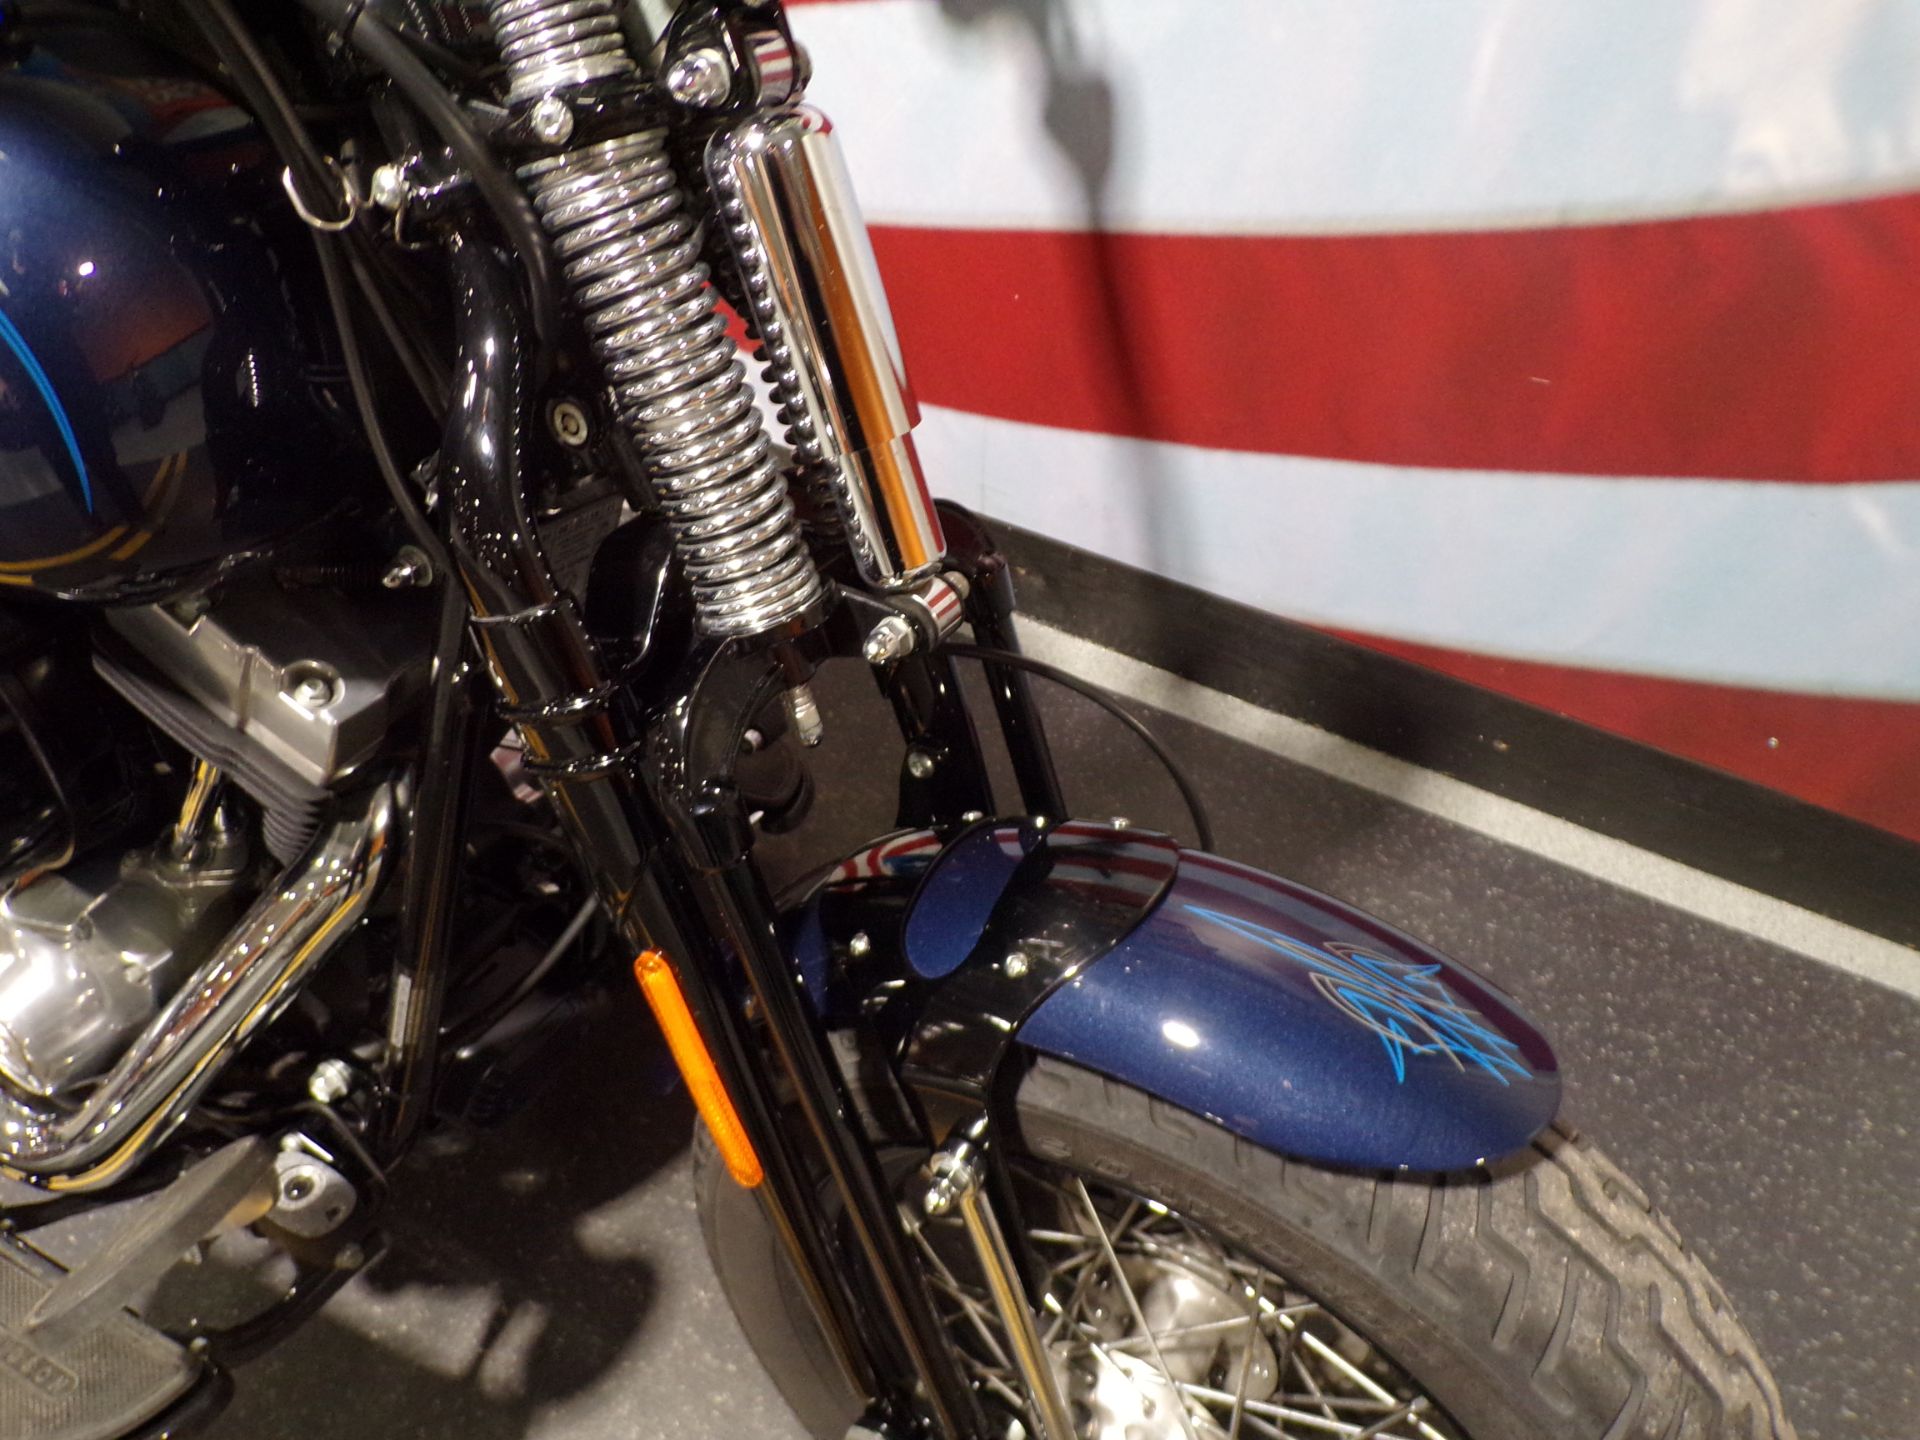 2008 Harley-Davidson Softail® Cross Bones™ in Honesdale, Pennsylvania - Photo 9